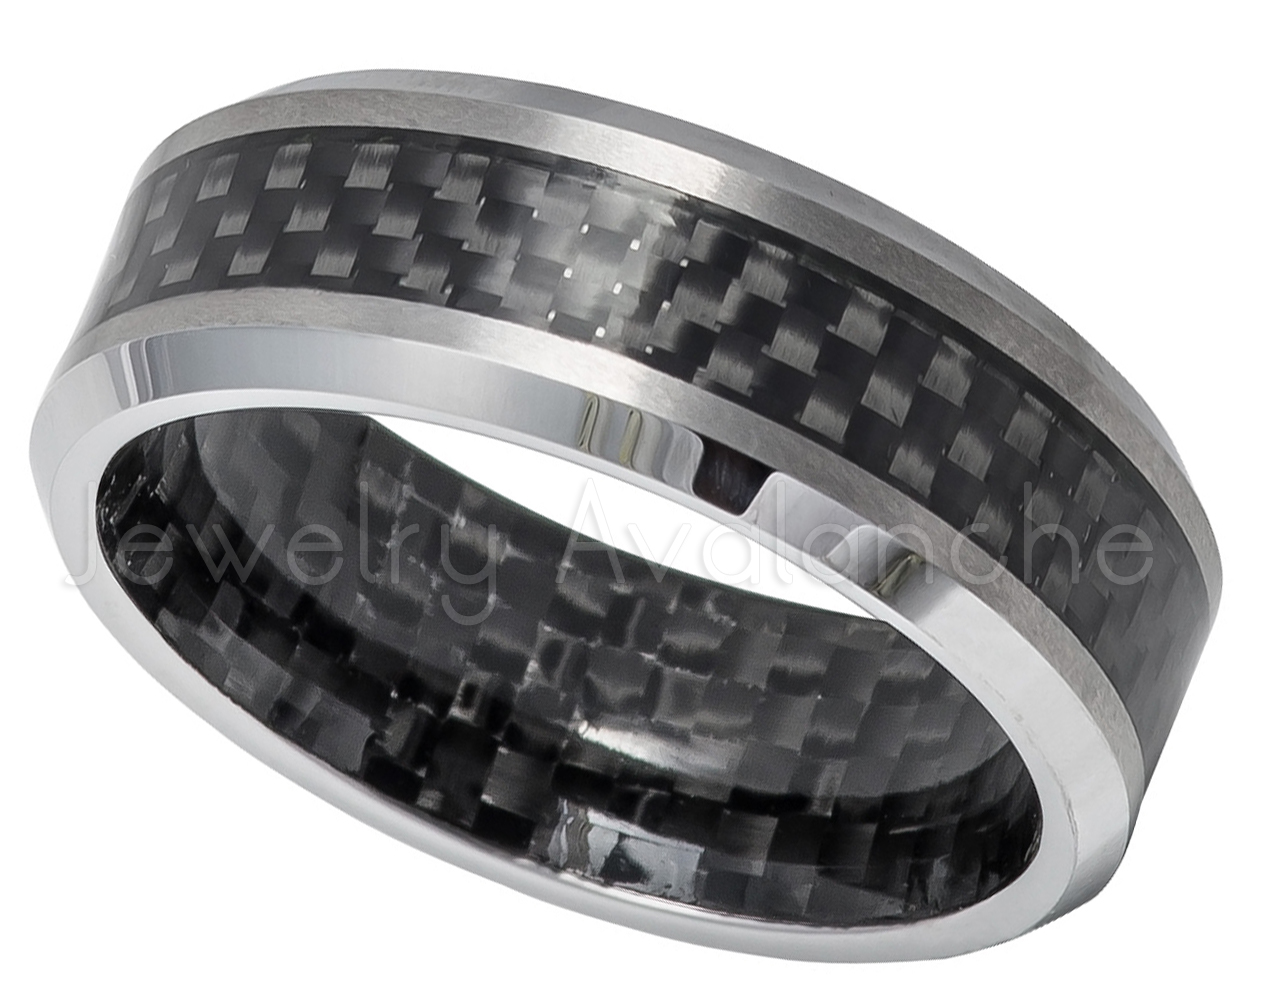 8mm Tungsten Carbide & Black Carbon Fiber Ring